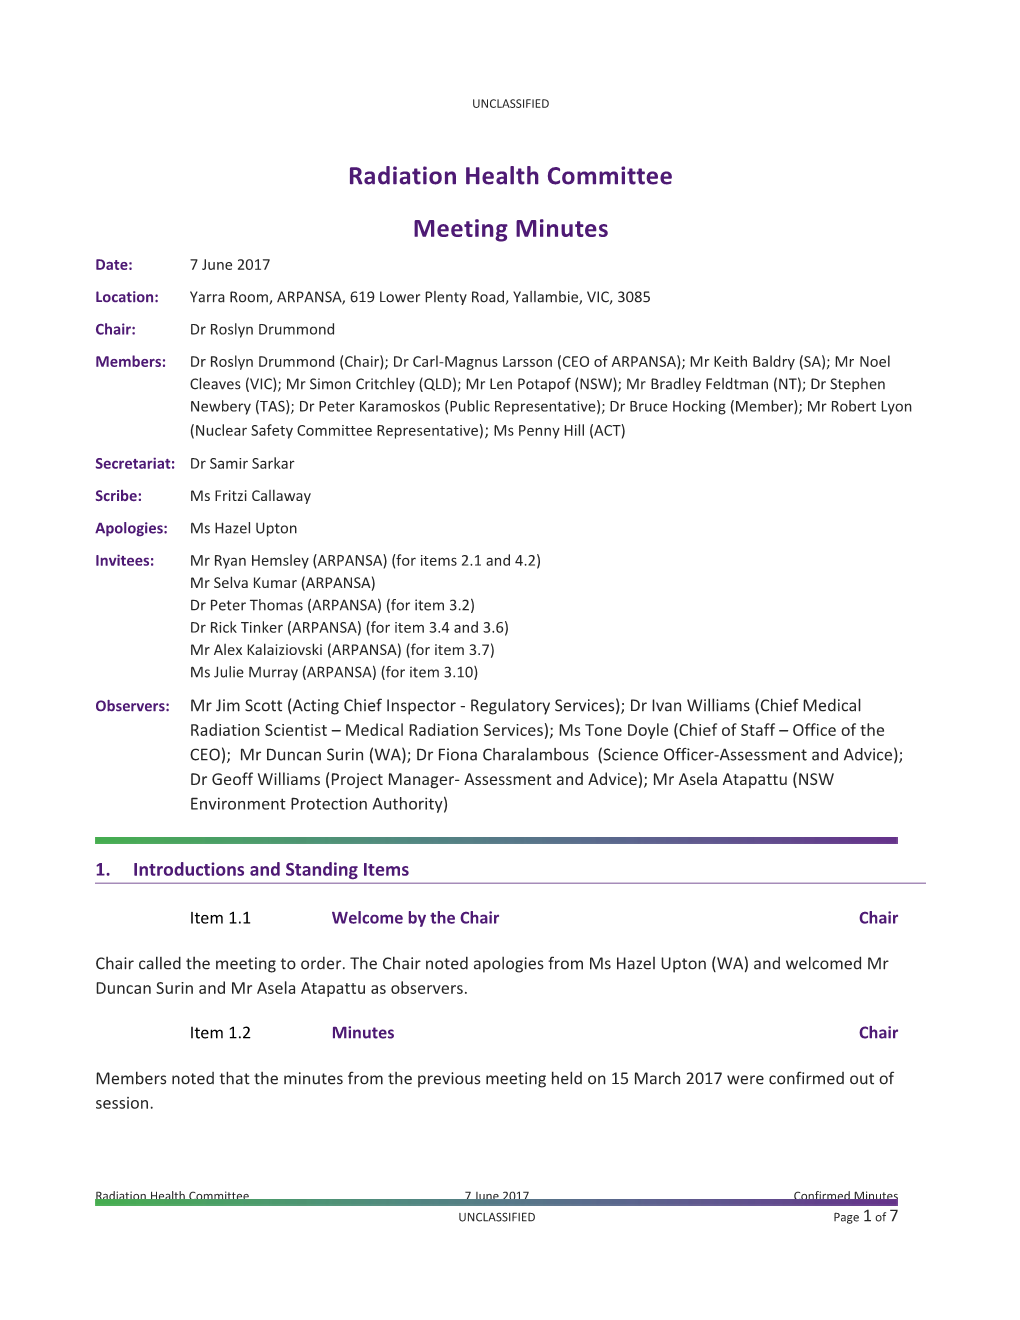 Radiation Health Committee